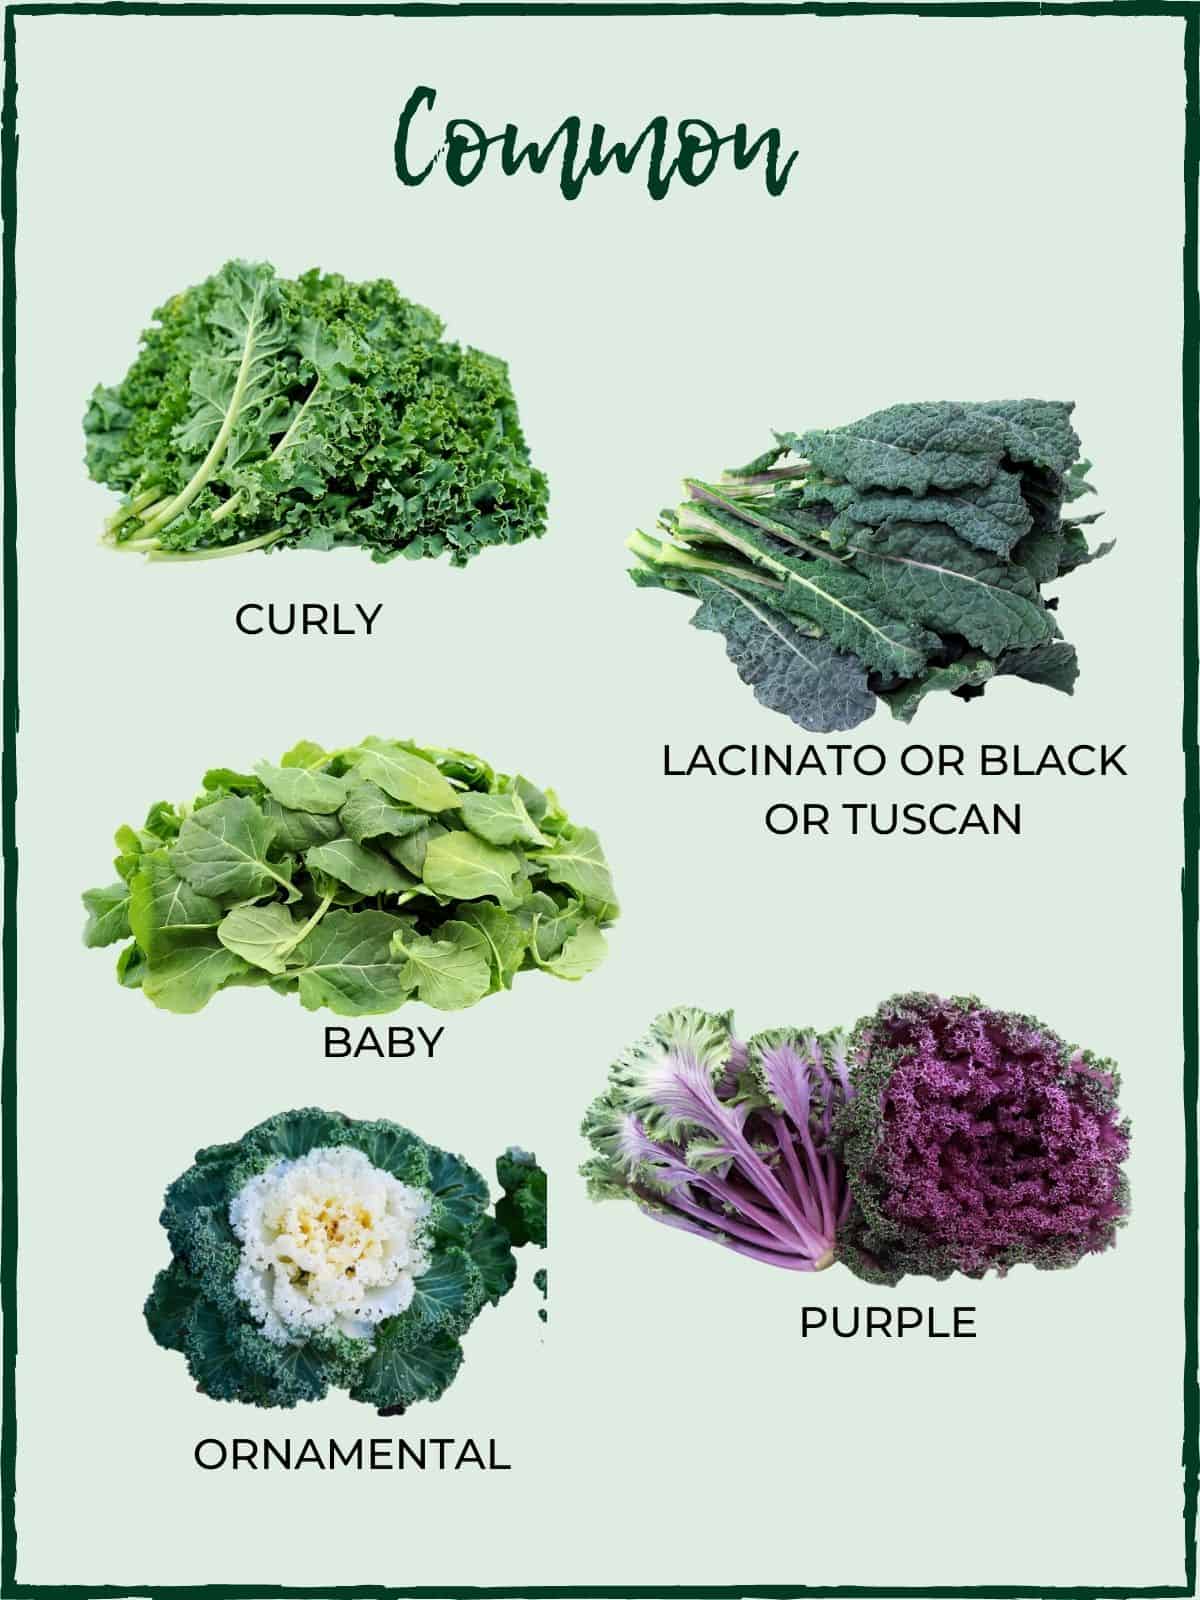 Kale 10 Health